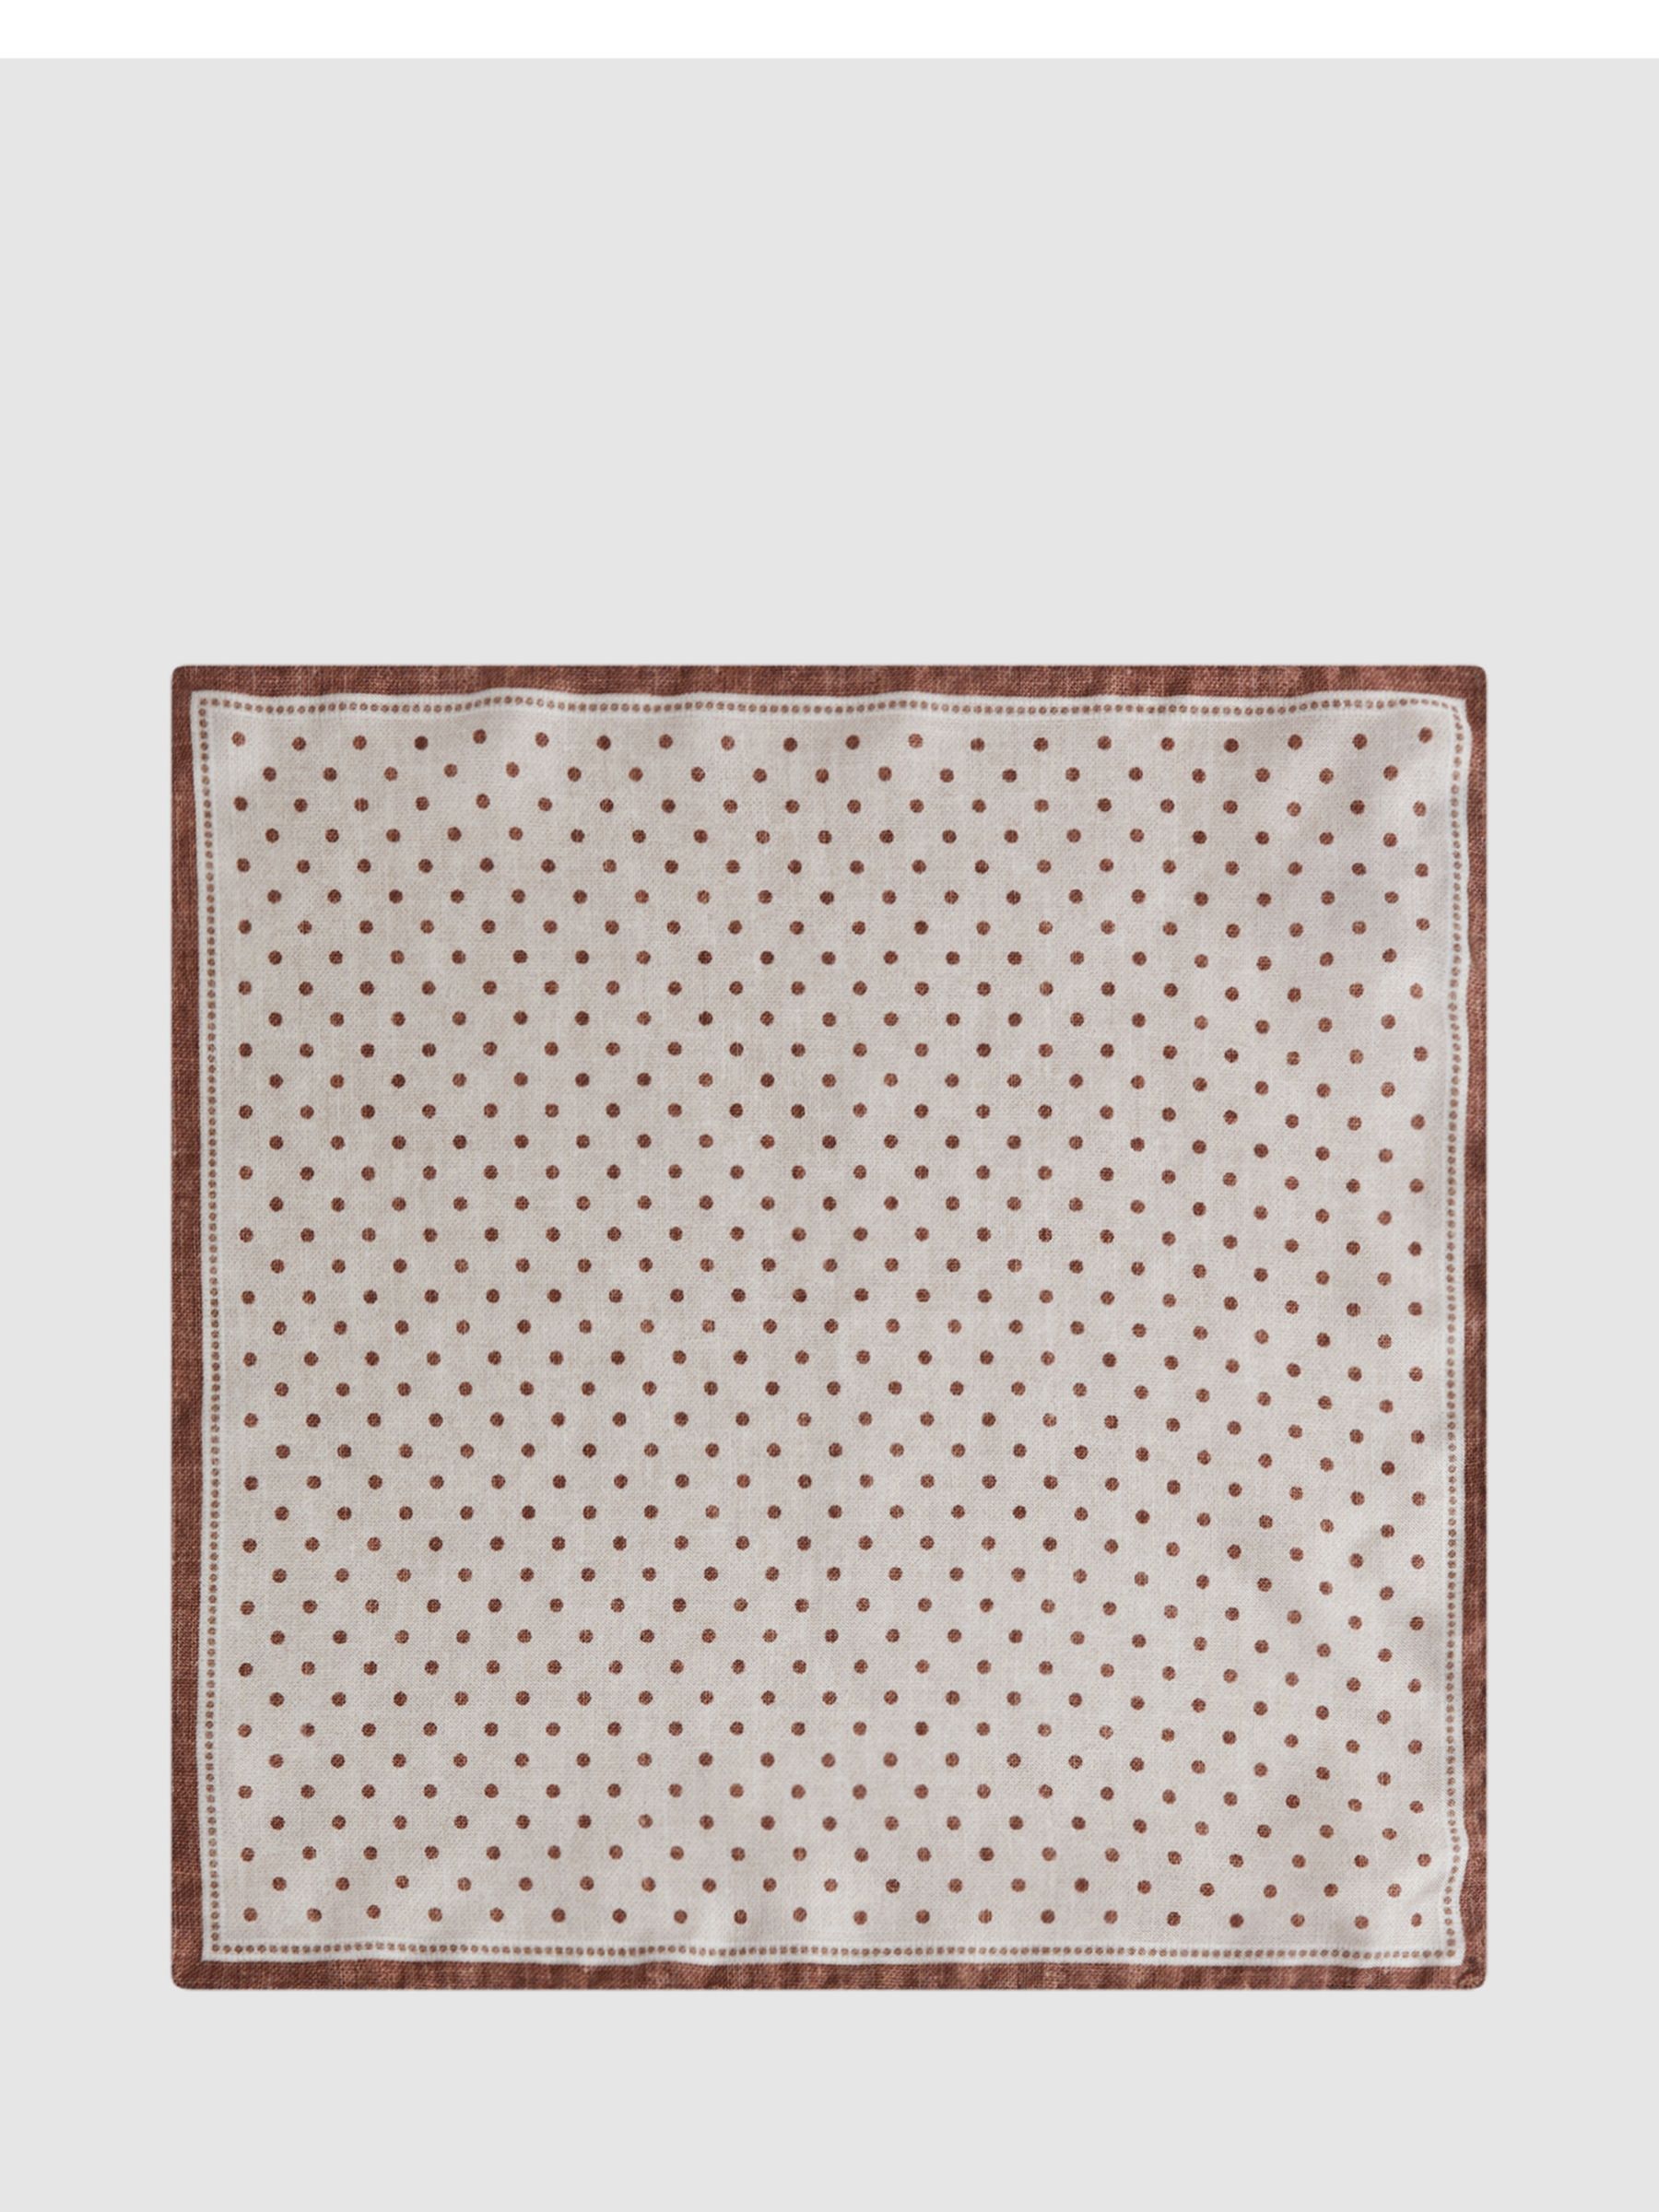 Reiss Vecchia Polka Dot Print Silk Handkerchief, Oatmeal Melange, One Size